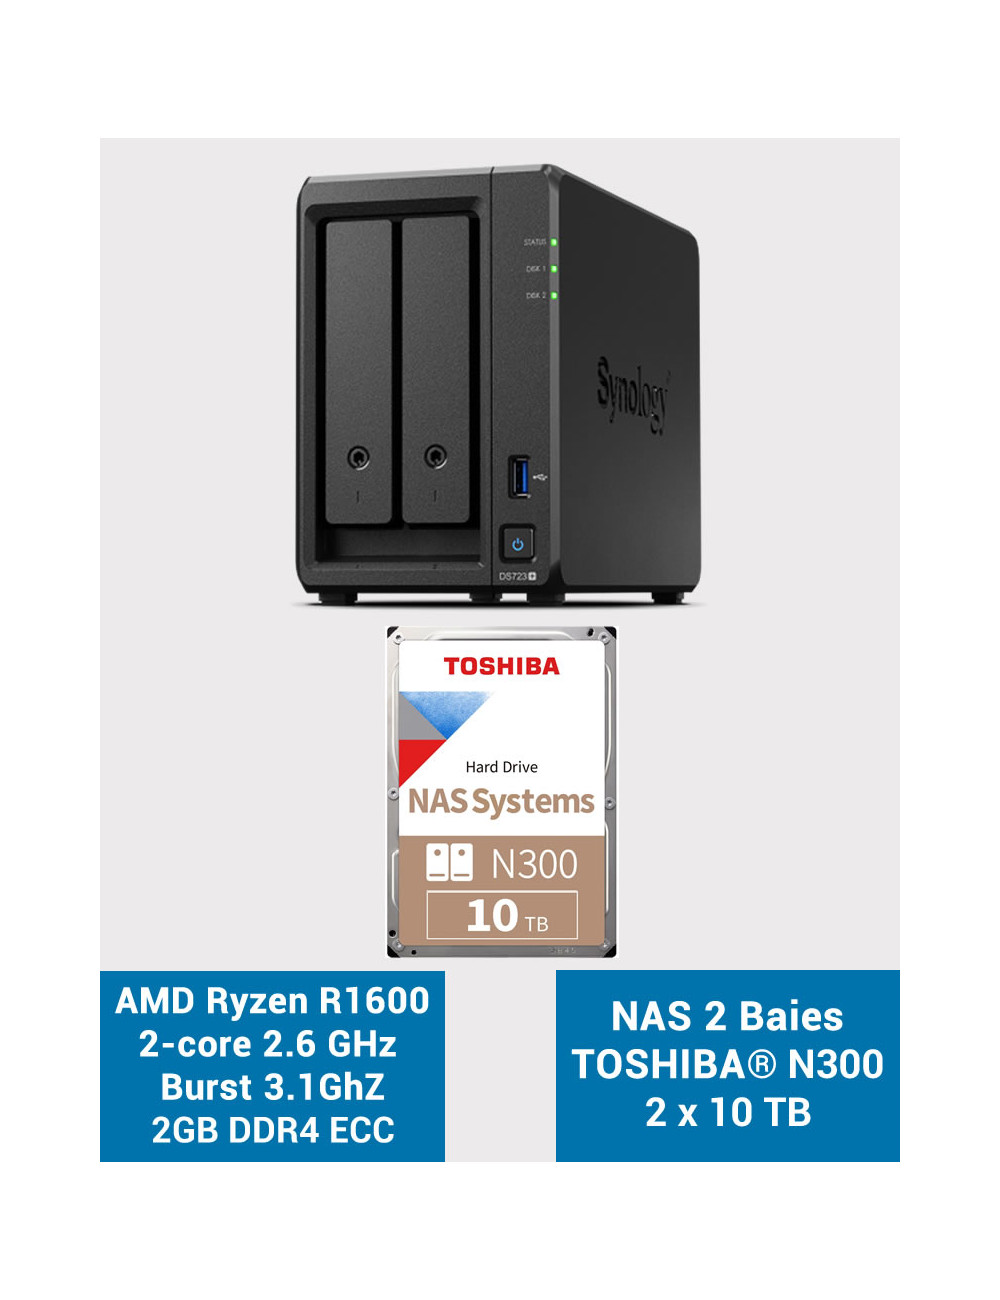 Synology DS723+ Servidor NAS Toshiba N300 20TB (2x10TB)